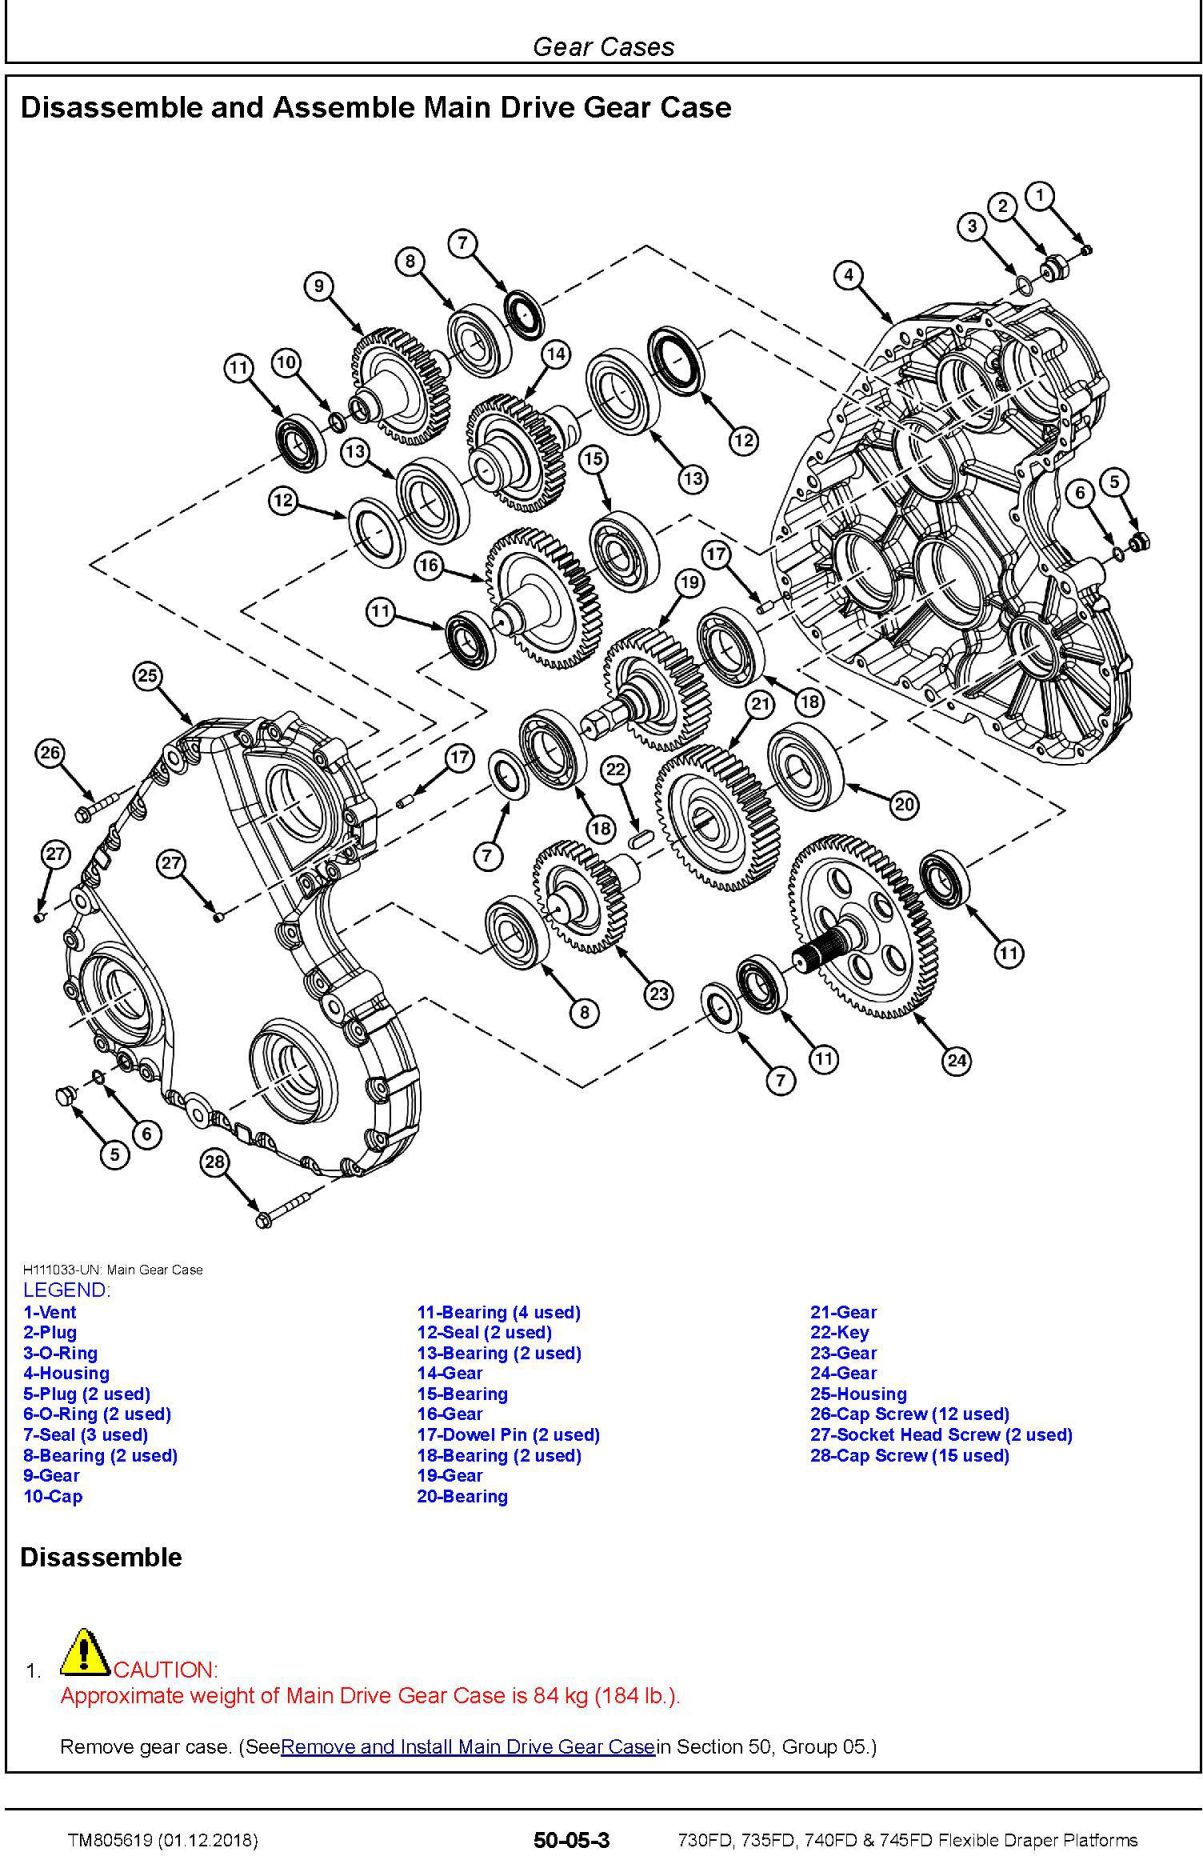 John Deere 730FD to 745FD Flexible Draper Platforms Technical Manual TM805619_1